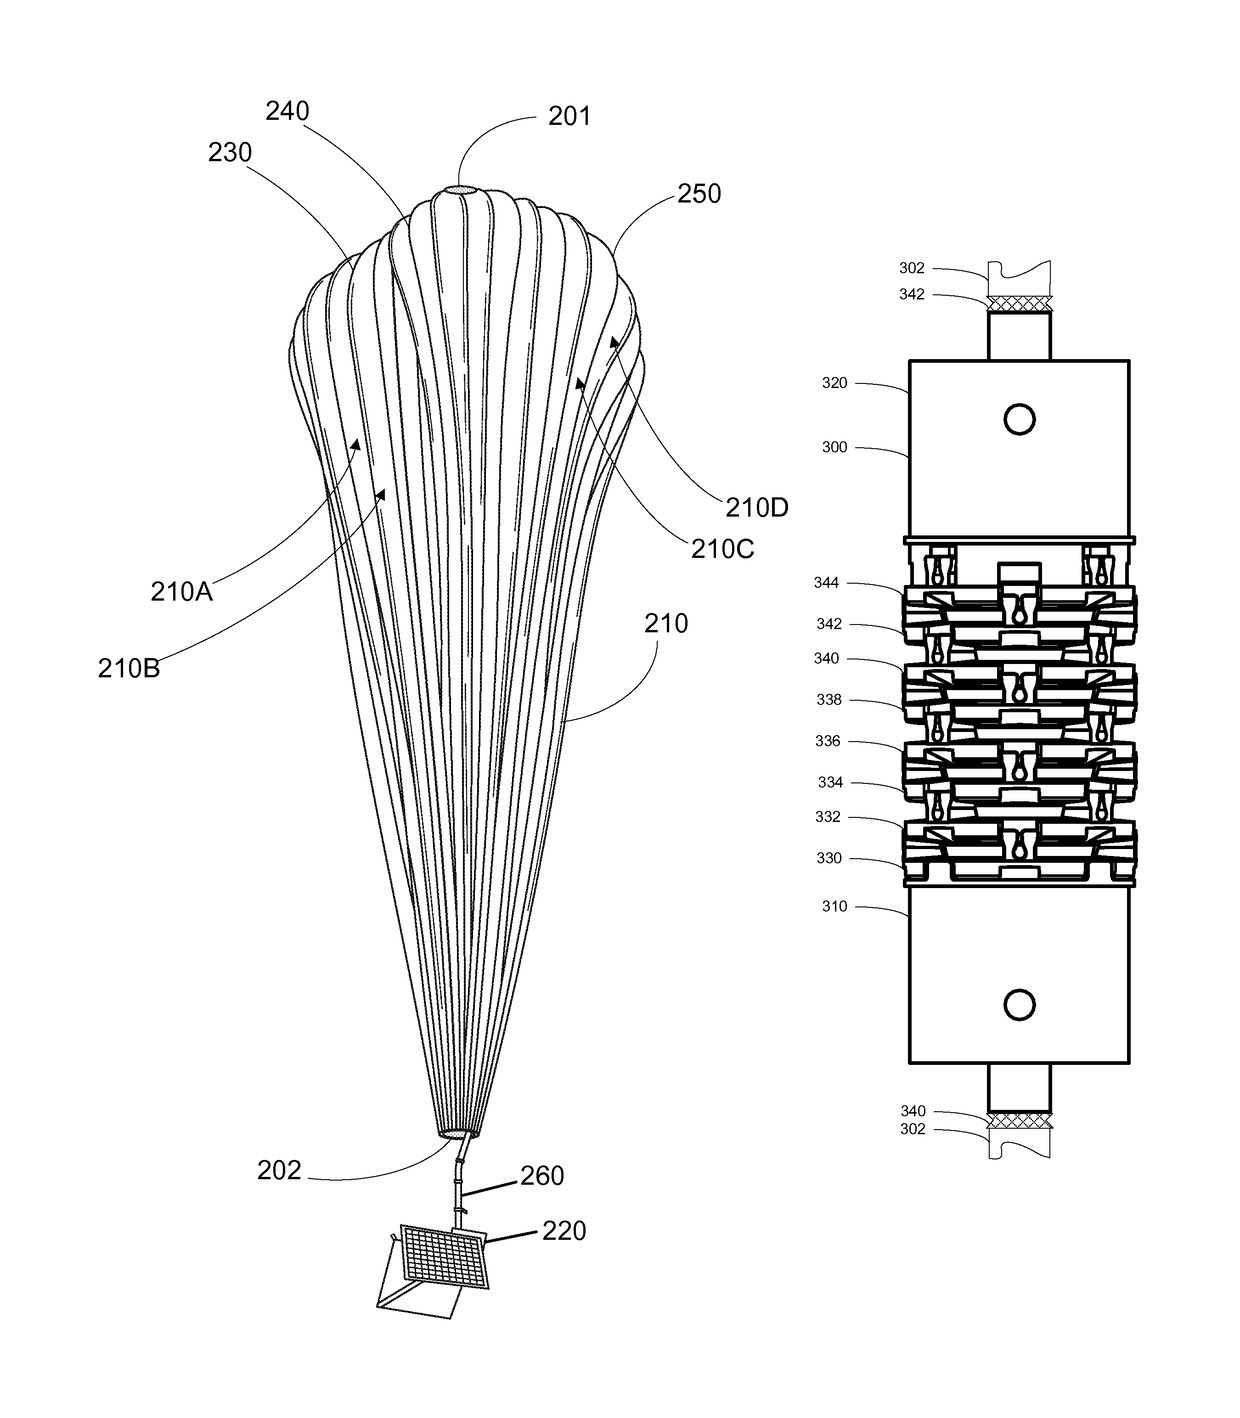 Flex connection for high altitude balloons